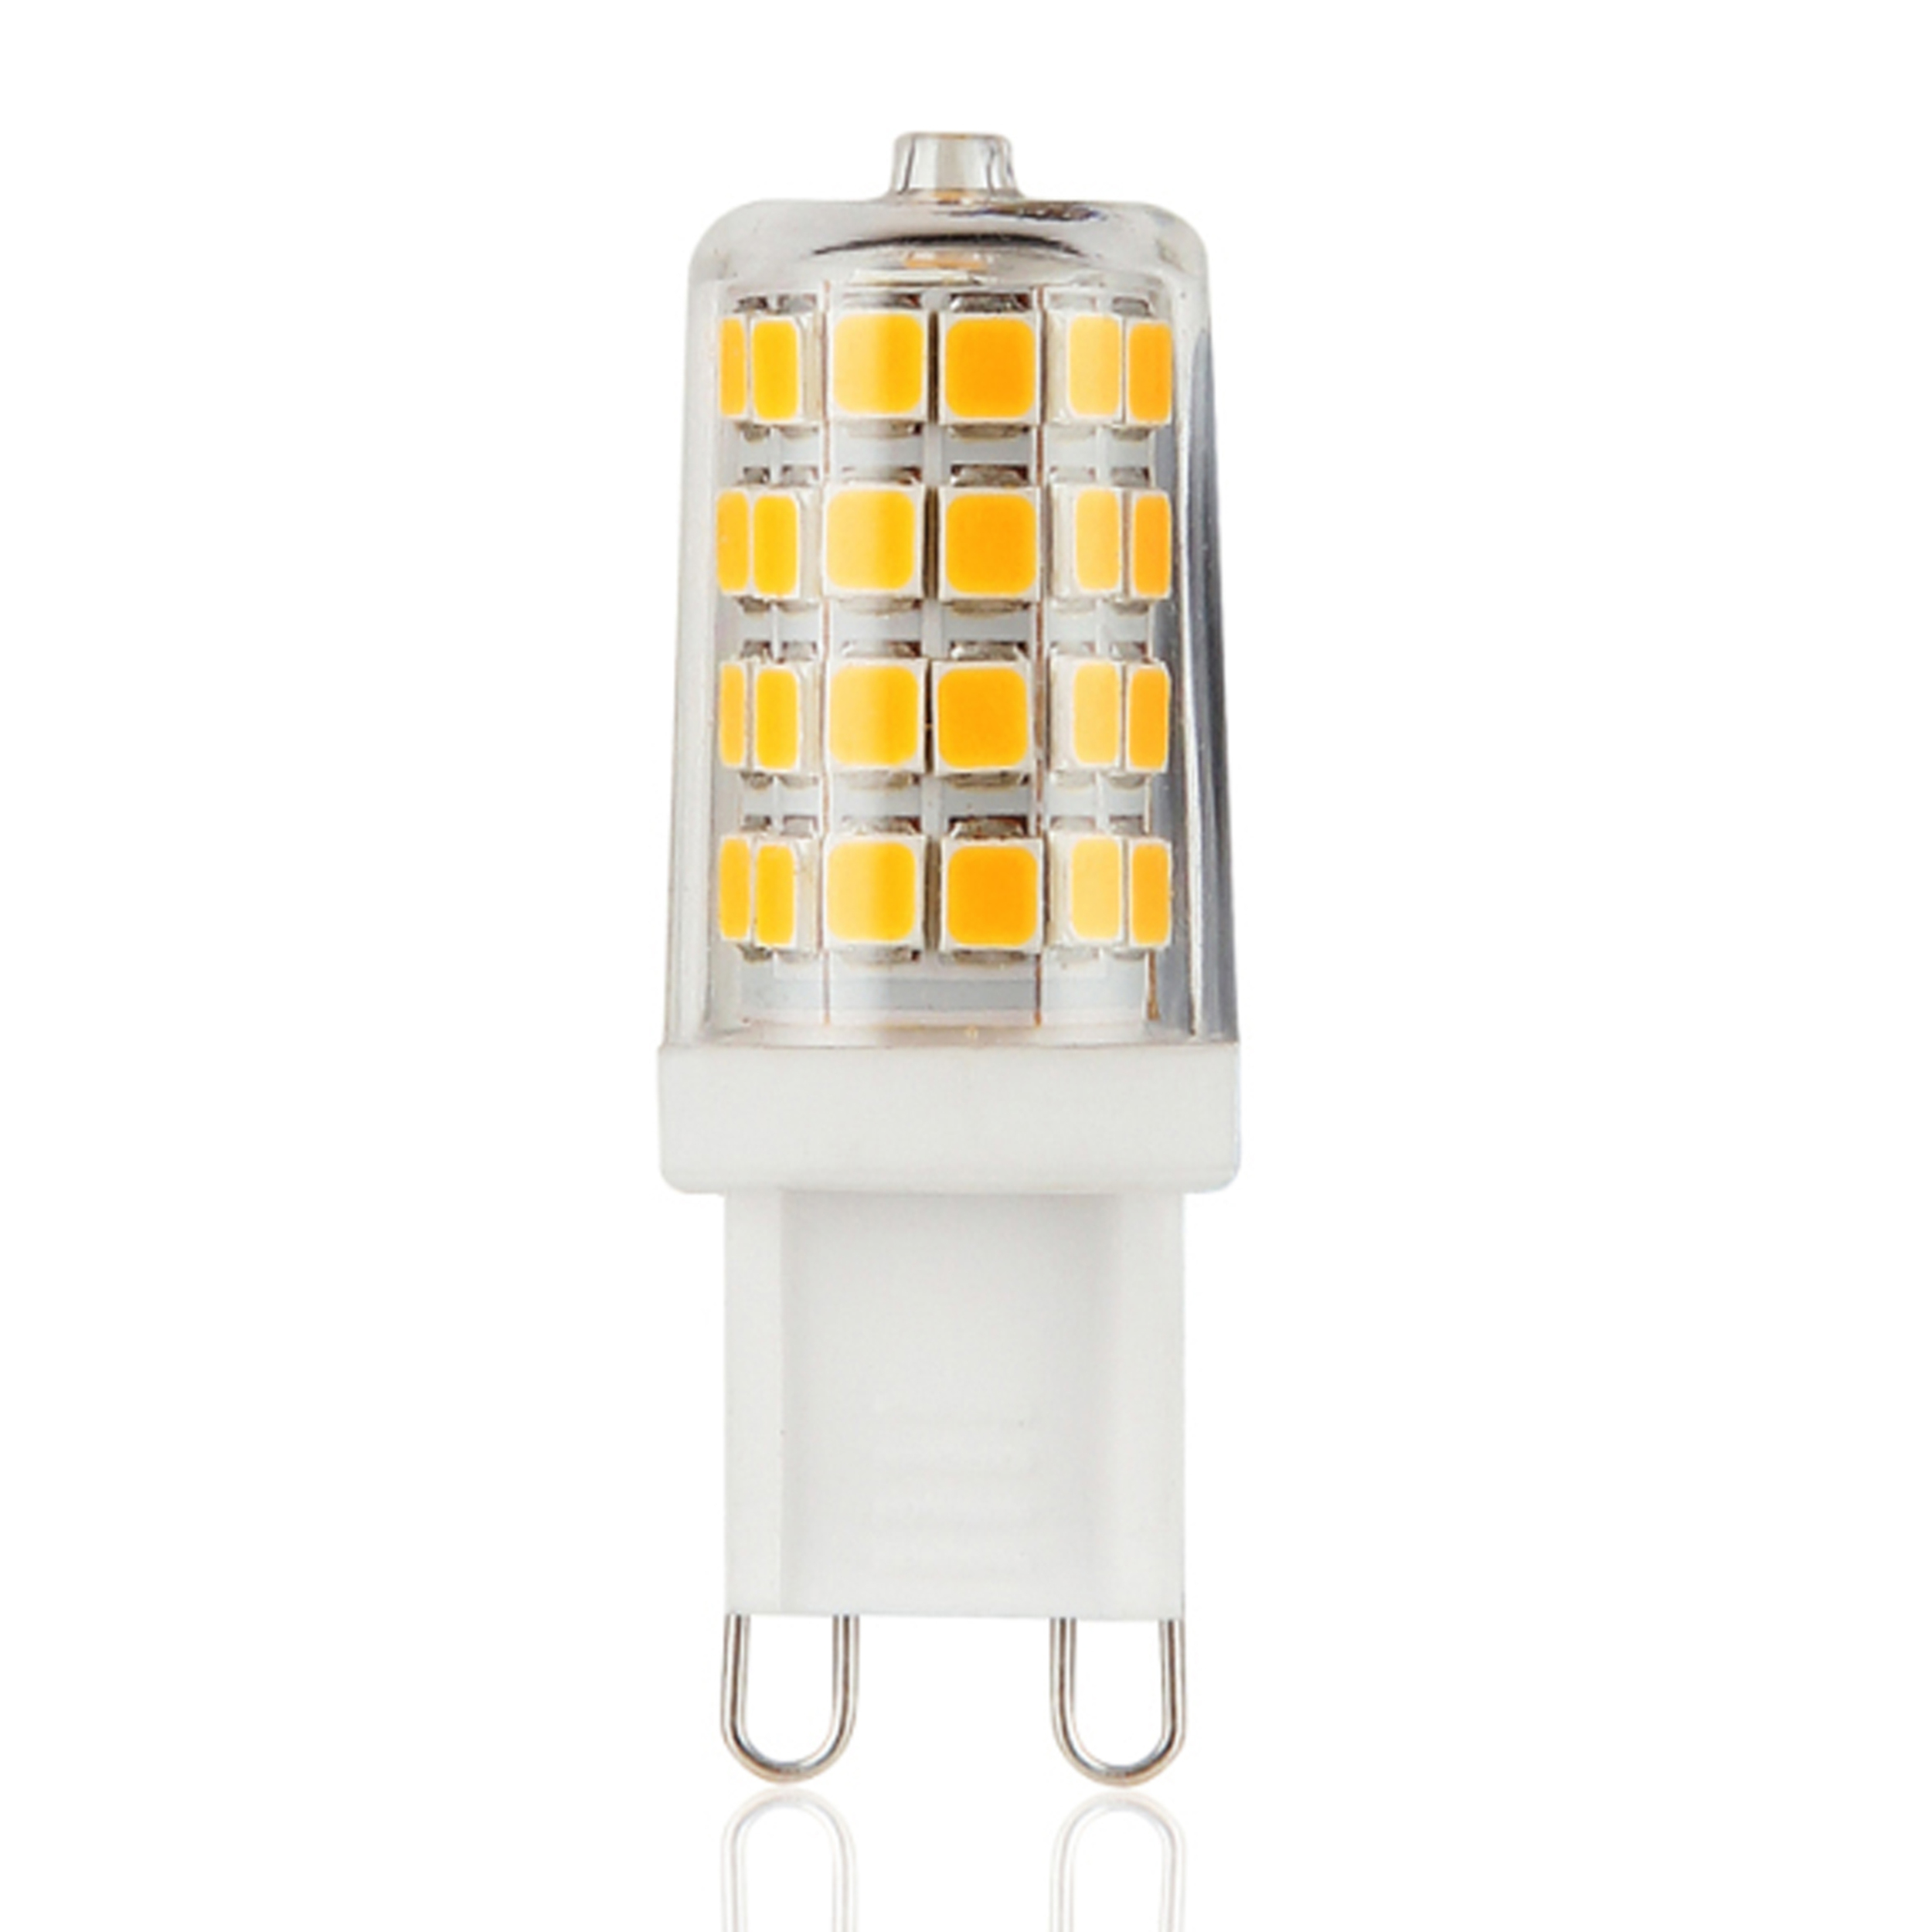 Leuchtmittel LED Capsule weiß/warmweiß Kunststoff/Metall